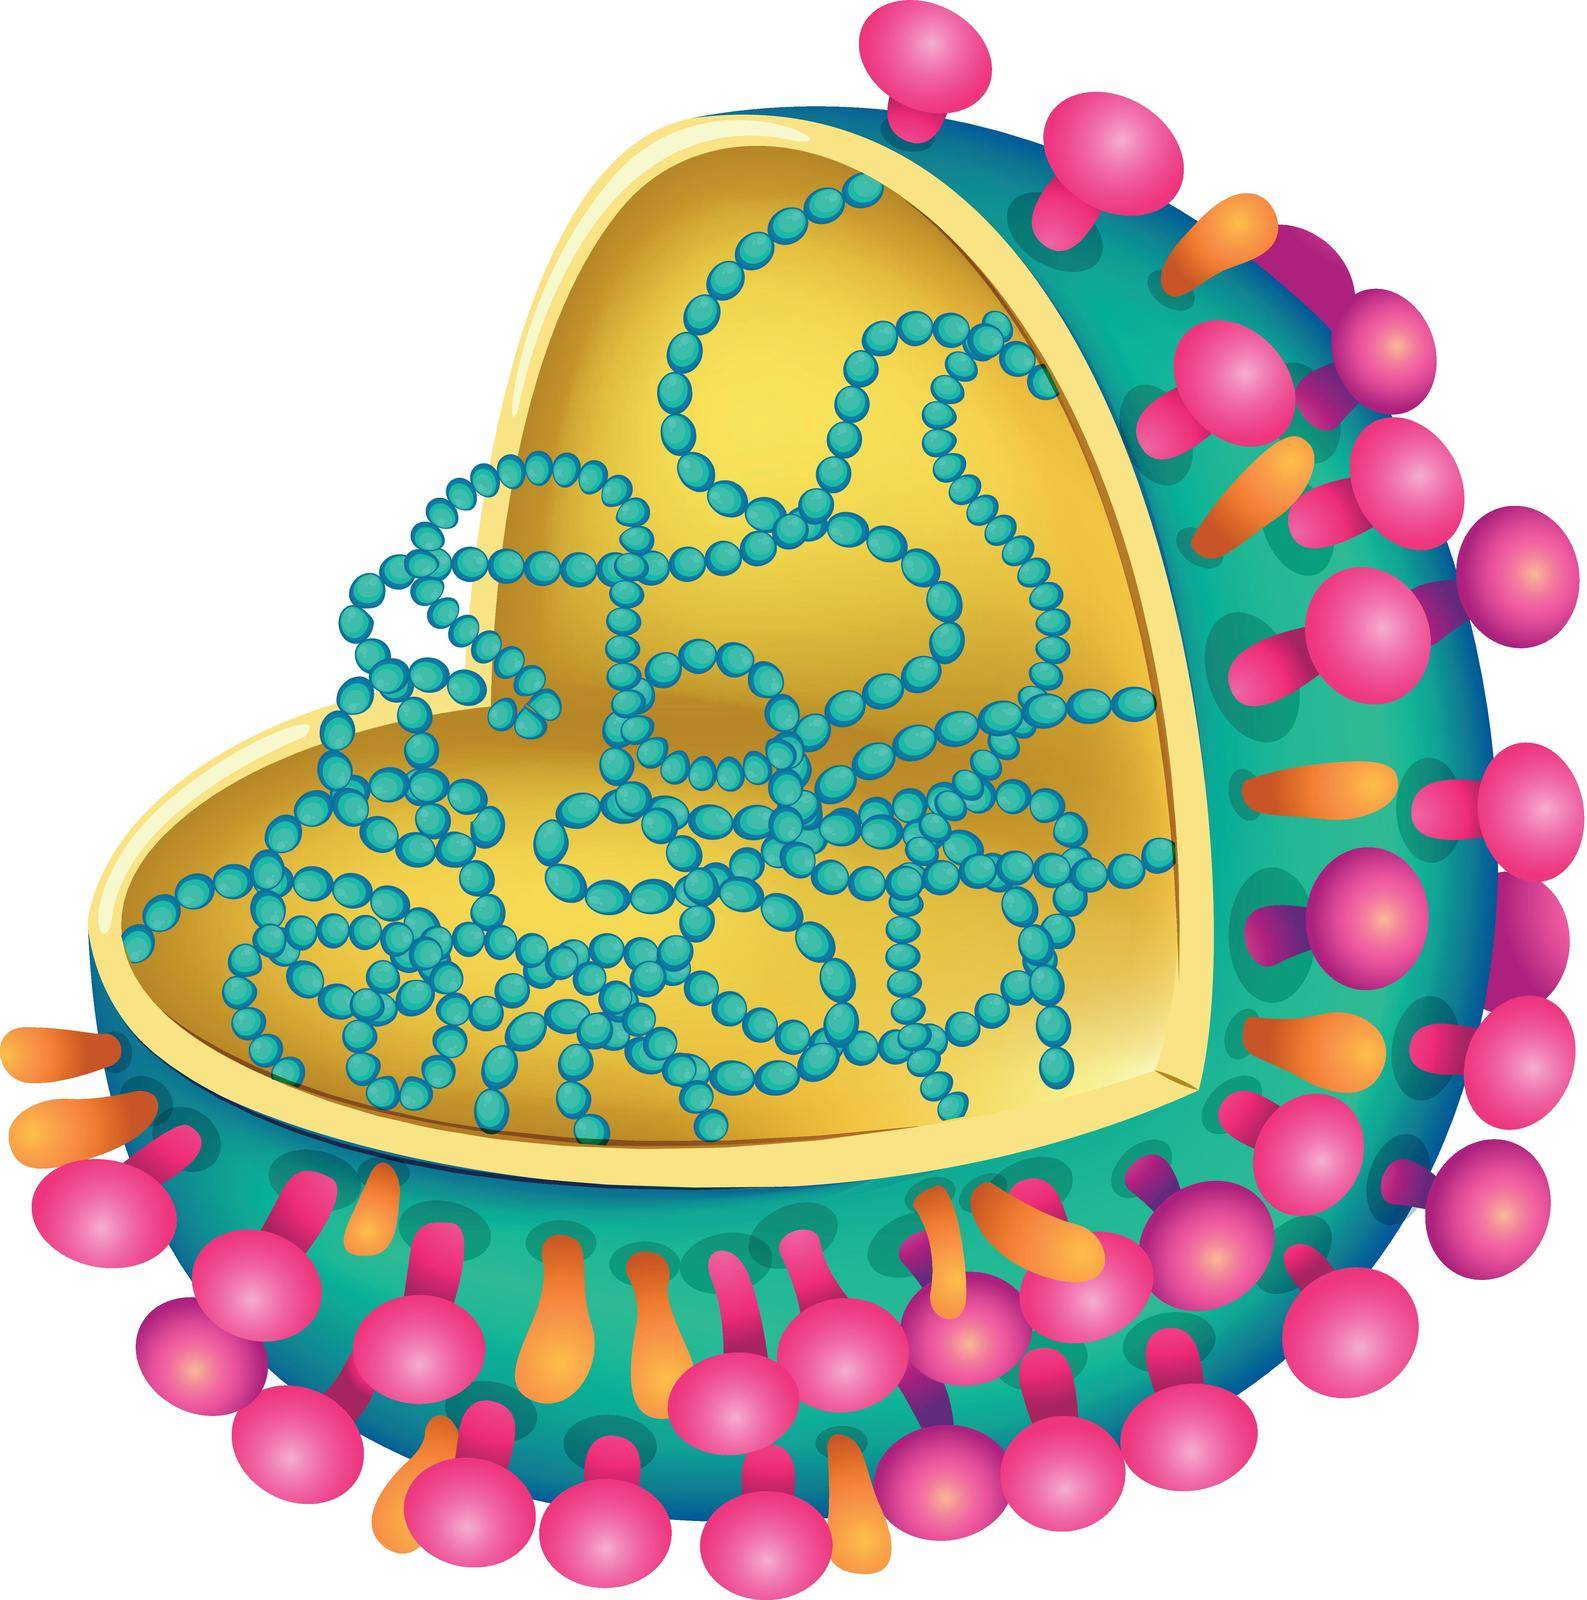 Illustration of the influenza virus